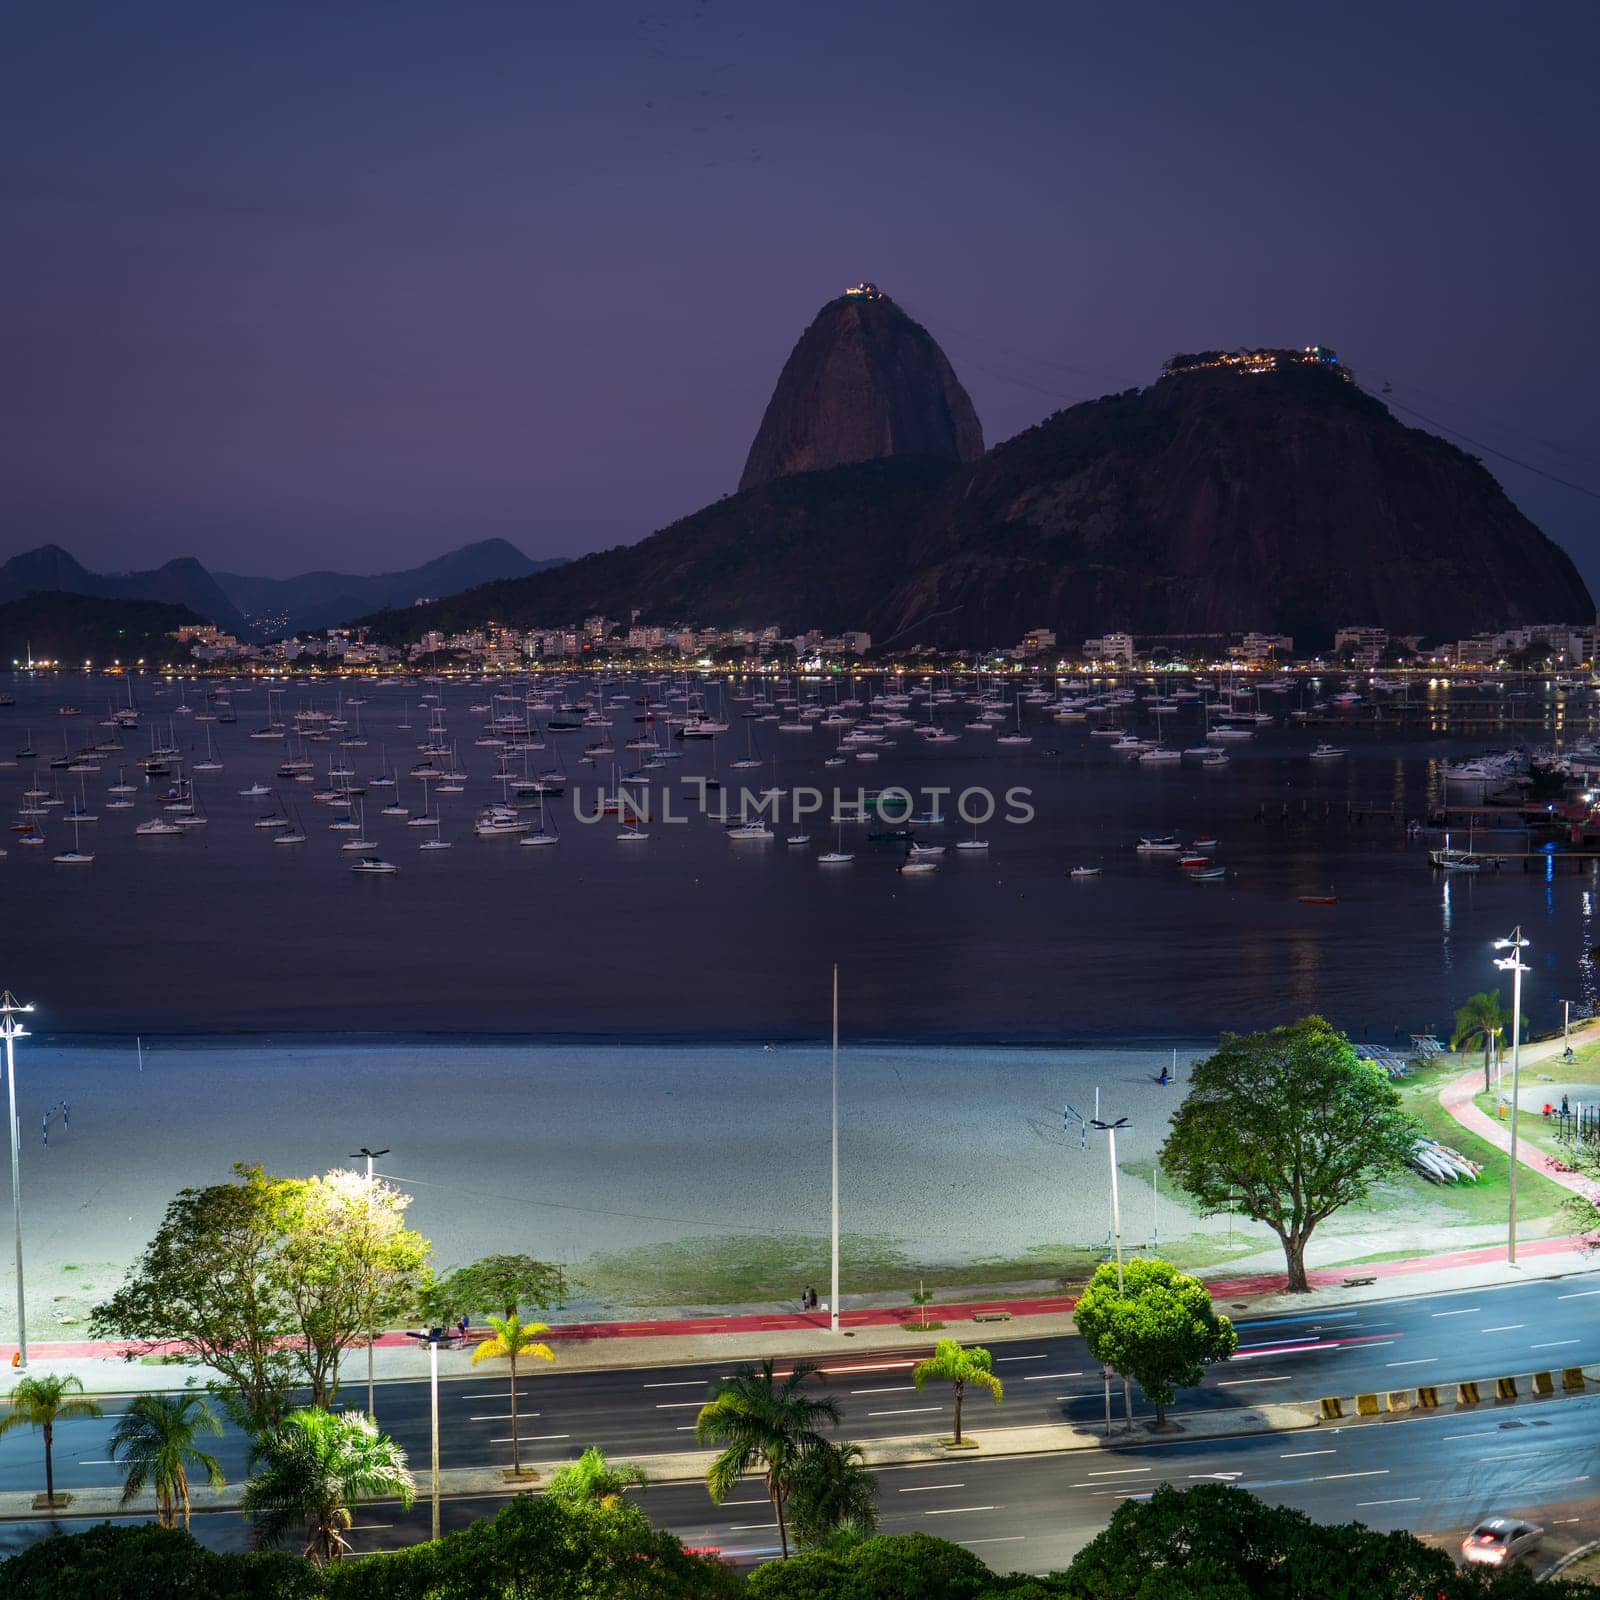 A peaceful evening with boats in Rio de Janeiro's bay.